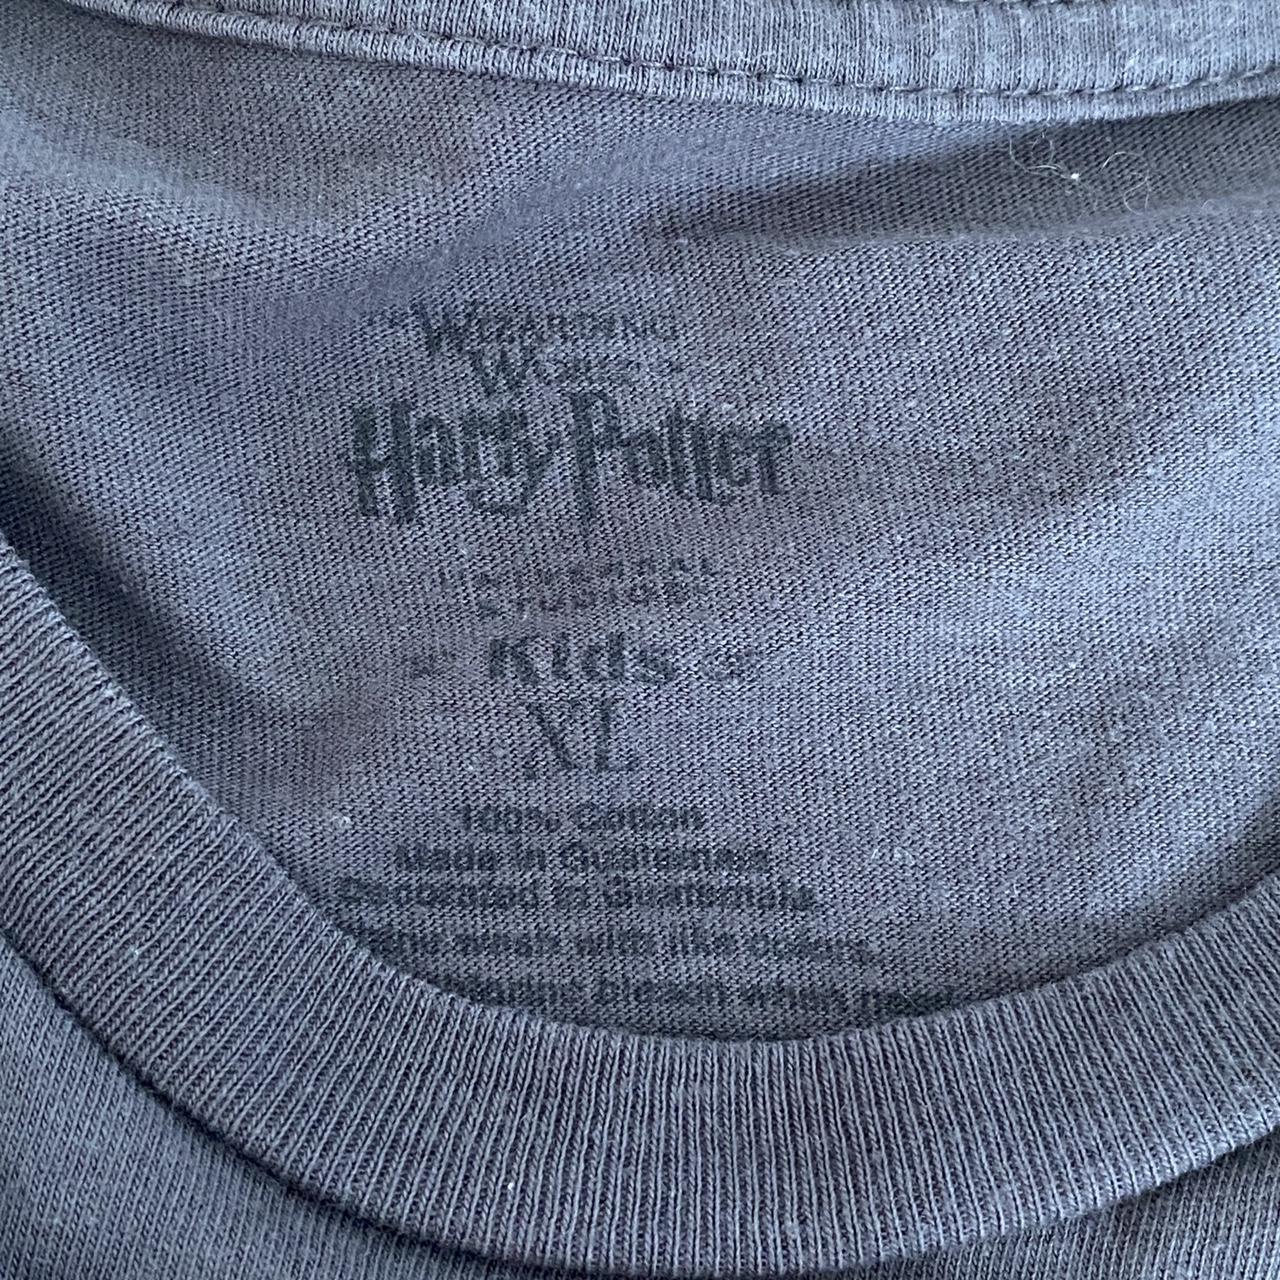 Original Warner Bros studio Harry Potter t shirt!... - Depop